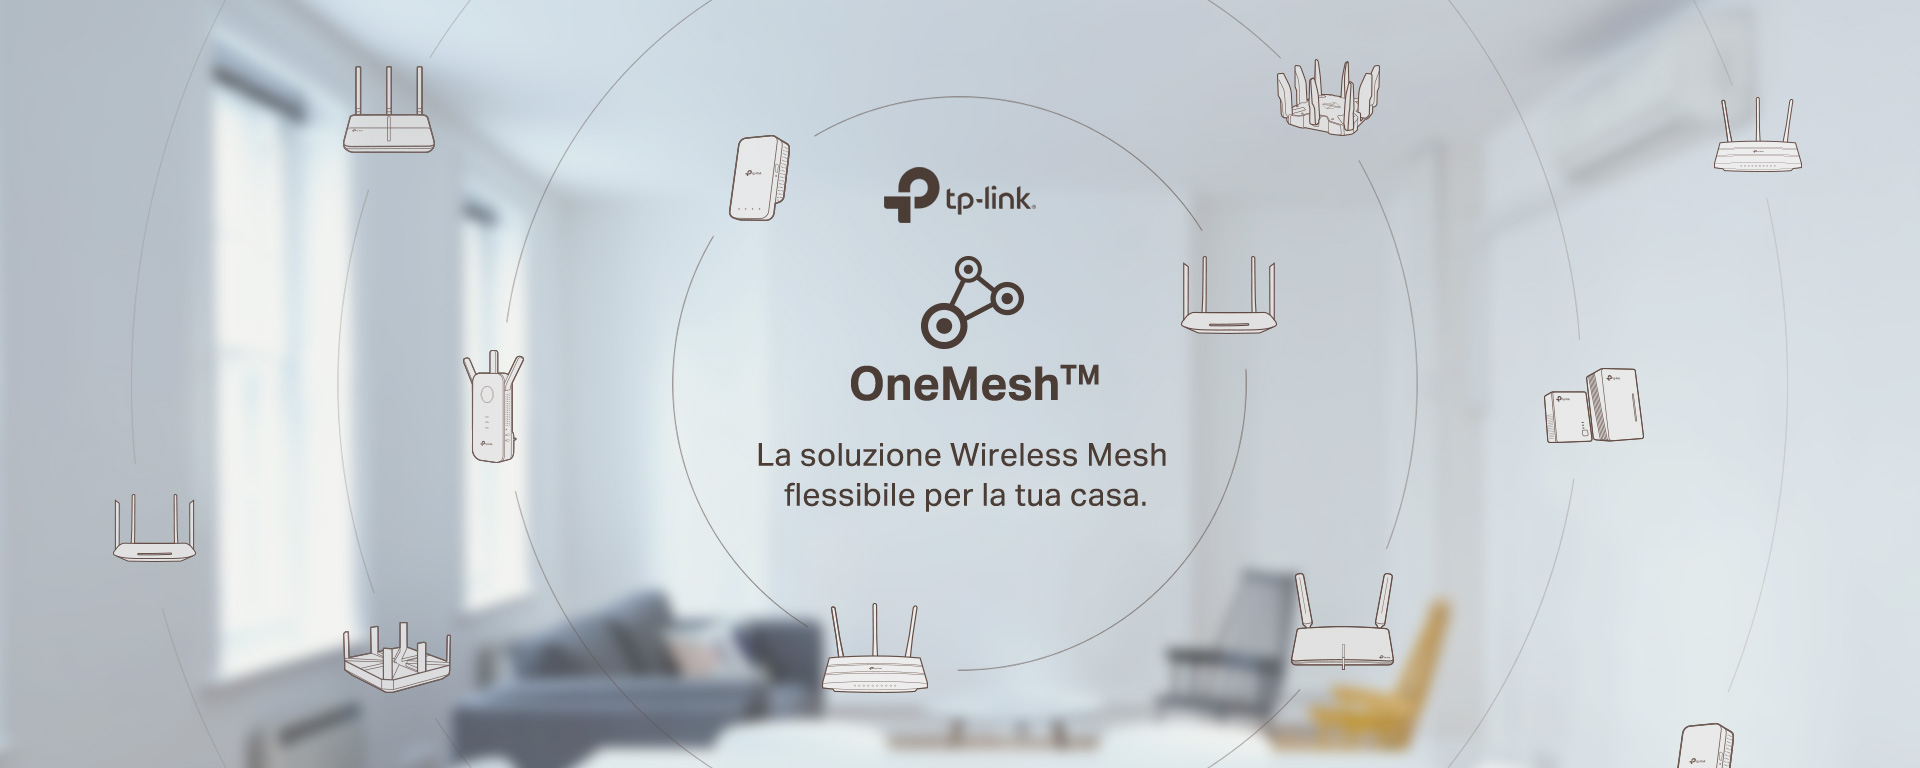 OneMesh, il Wi-Fi intelligente di TP-Link thumbnail